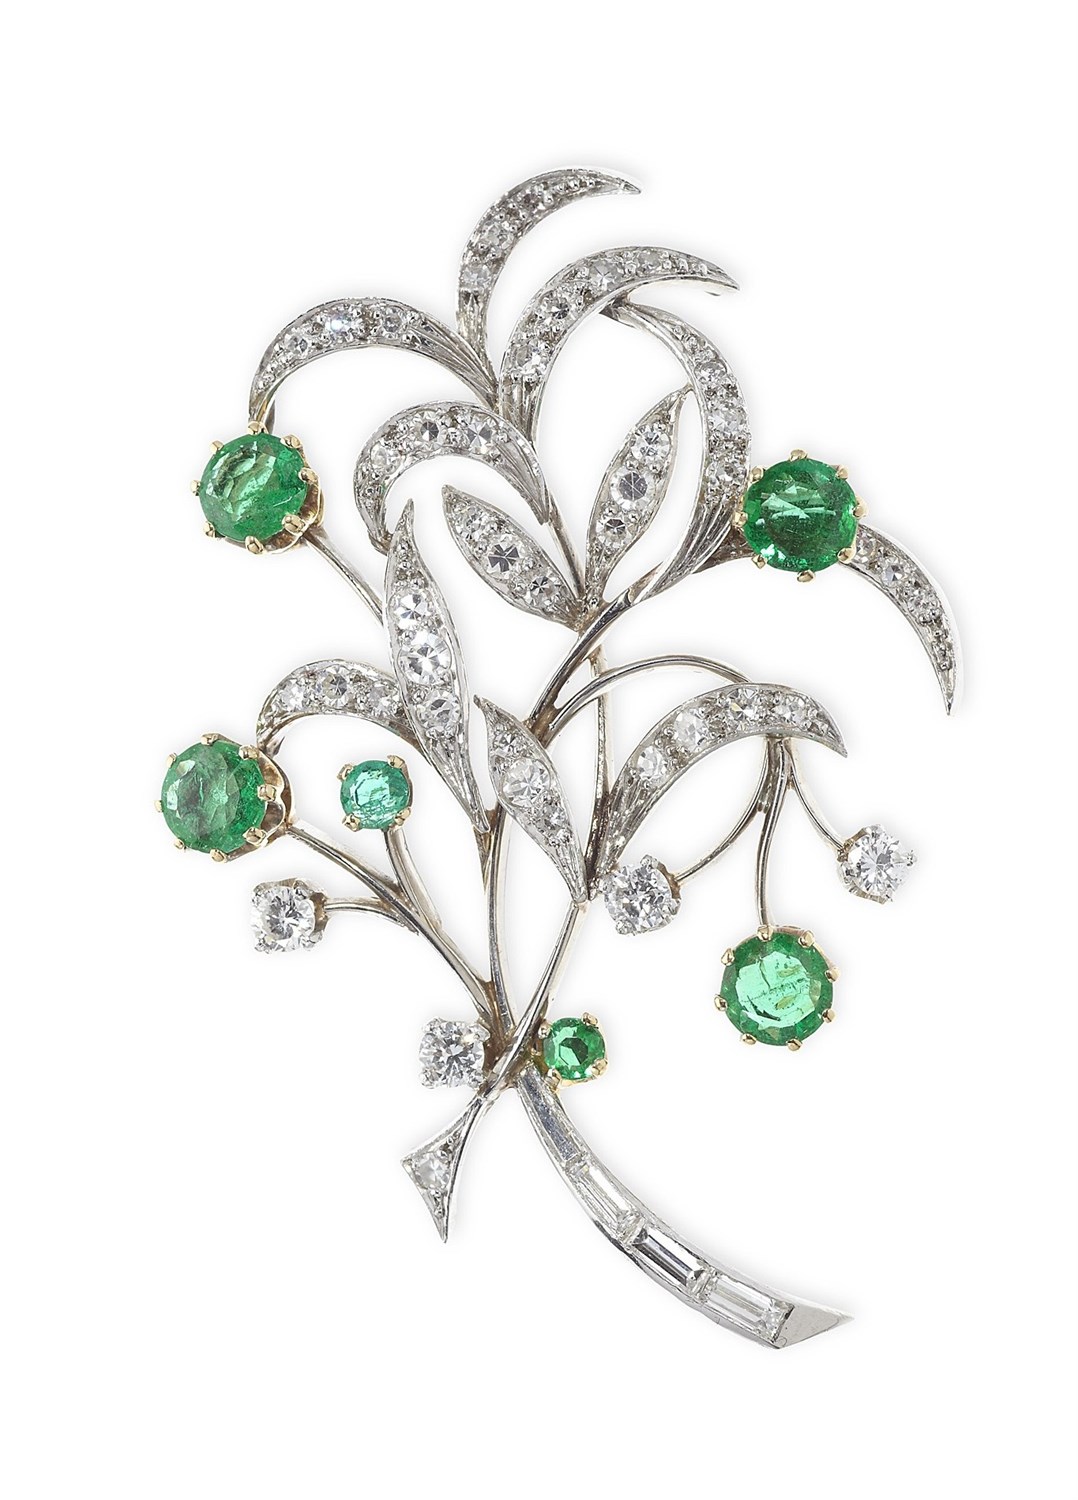 Lot 236 - An emerald and diamond set brooch